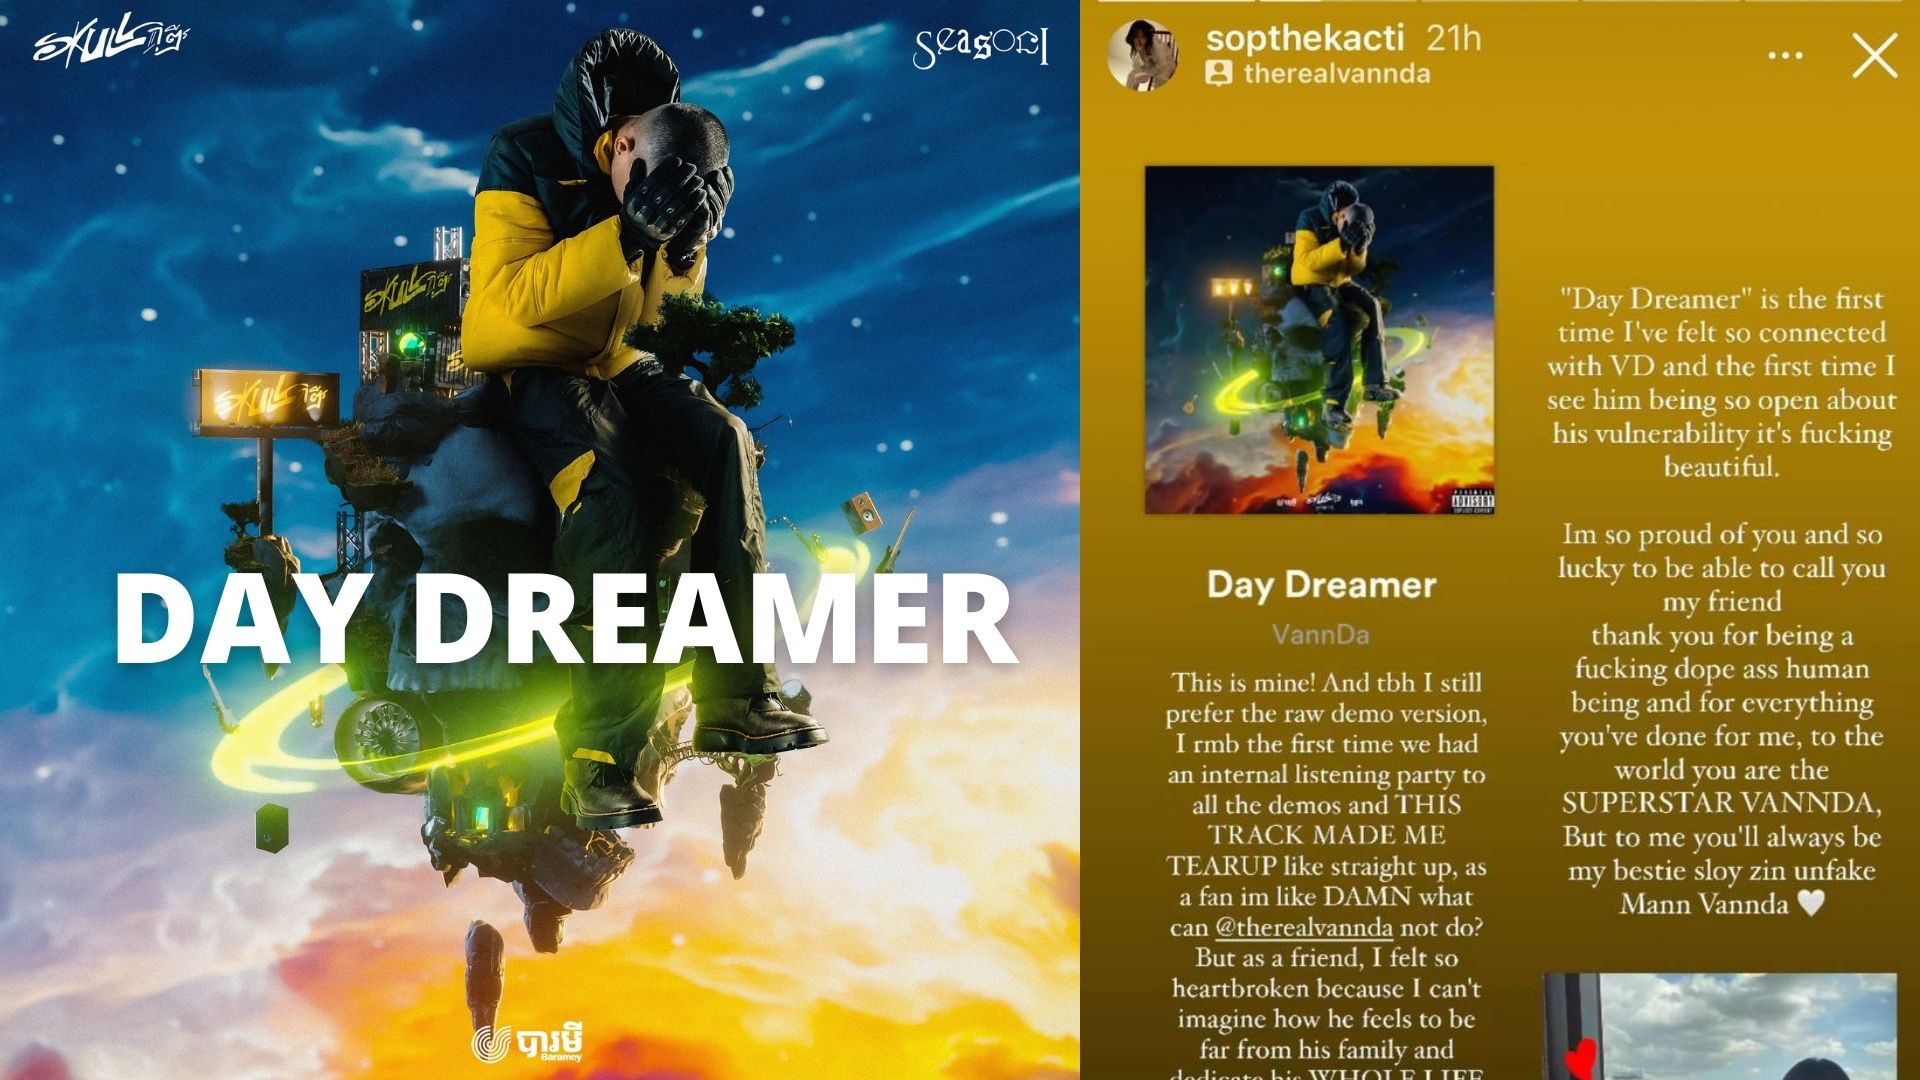 Sophia Kao ចែករំលែកអារម្មណ៏ពិតលើបទ Day​ Dreamer នៃ Album ថ្មីរបស់ VannDa 